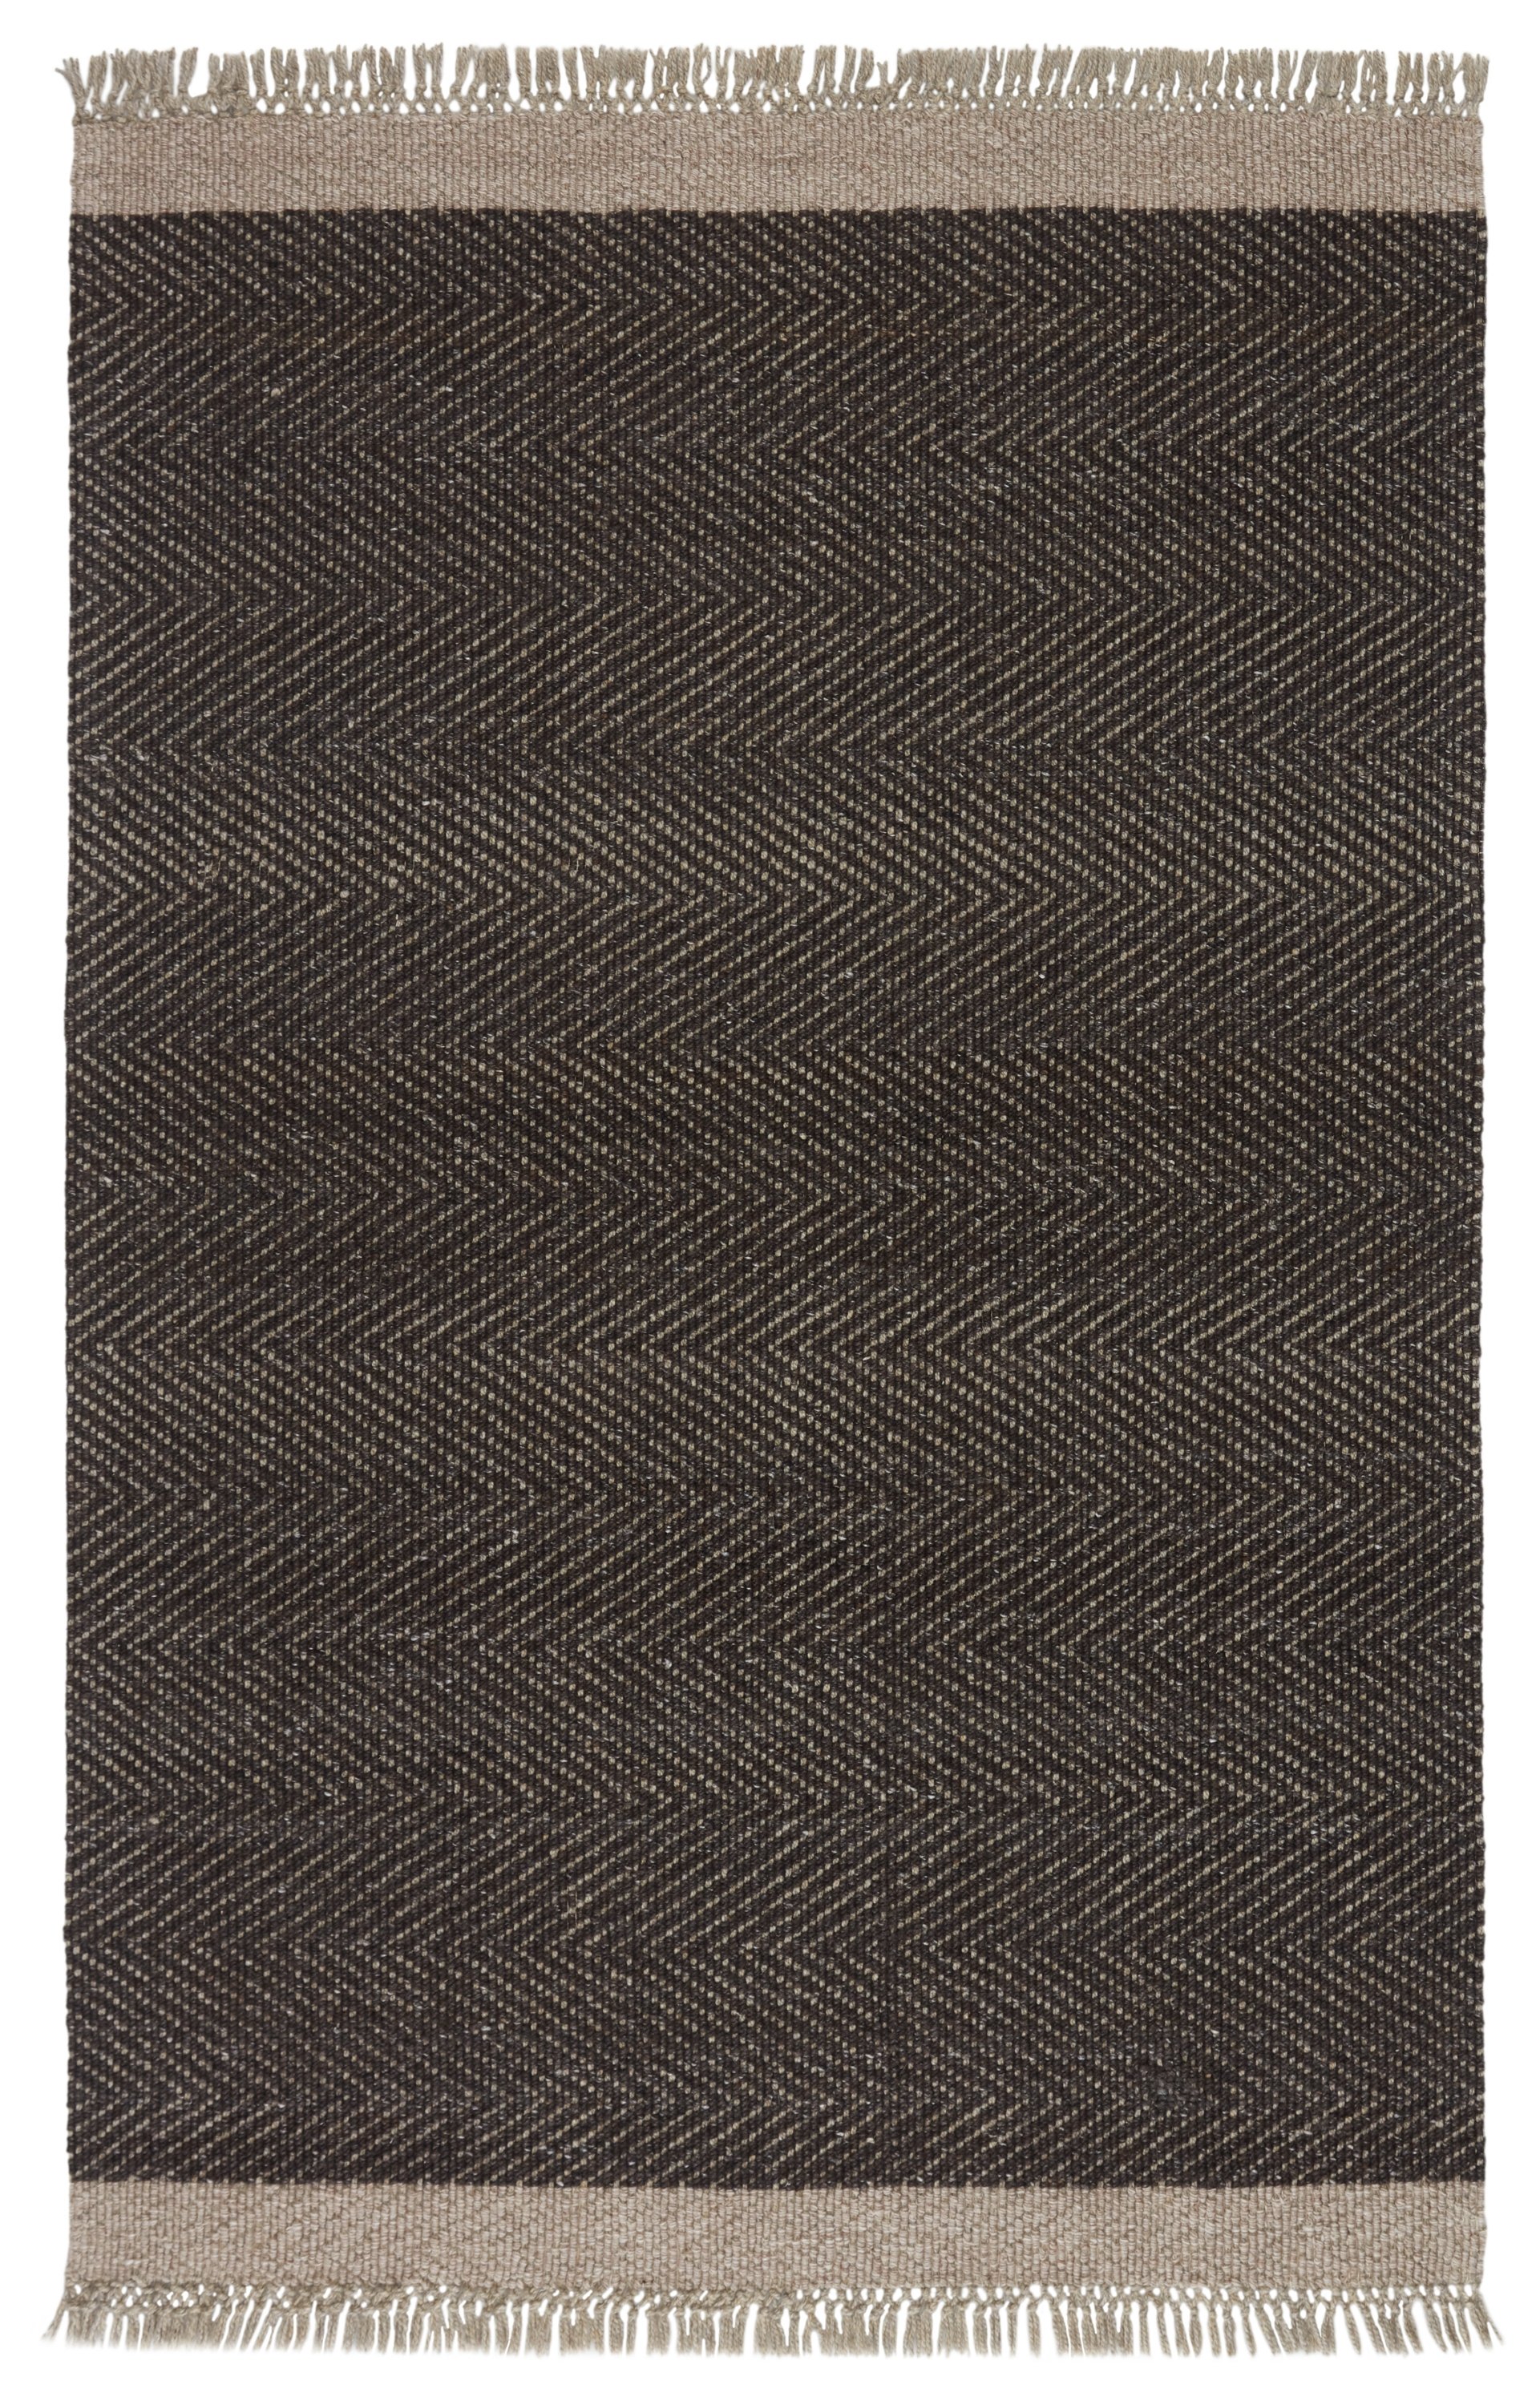 Sunday Handmade Border Dark Gray/ Beige Area Rug (10'X14') - Image 0